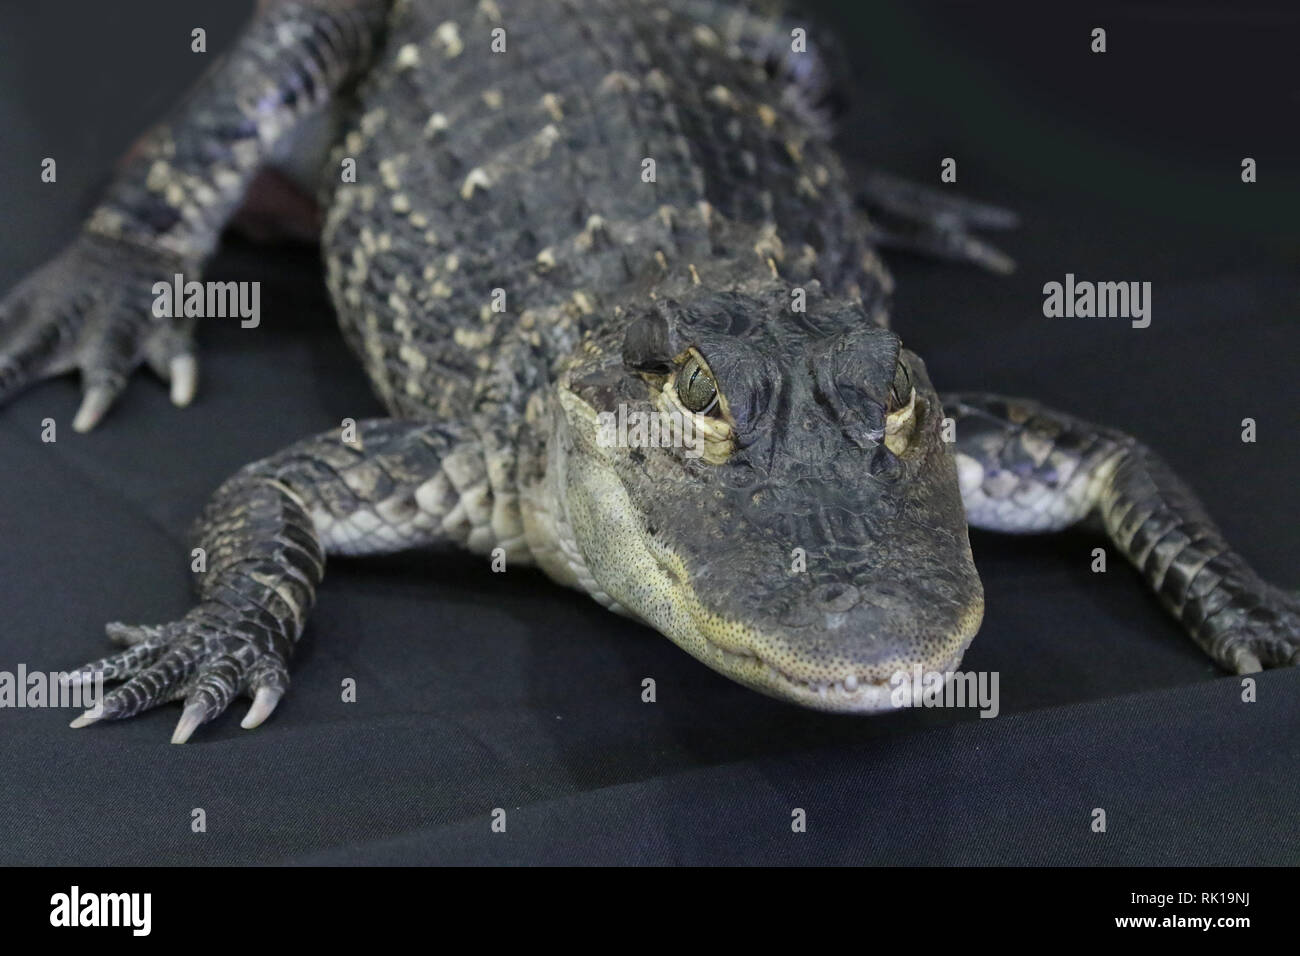 Baby Alligator at wildlife show Stock Photo